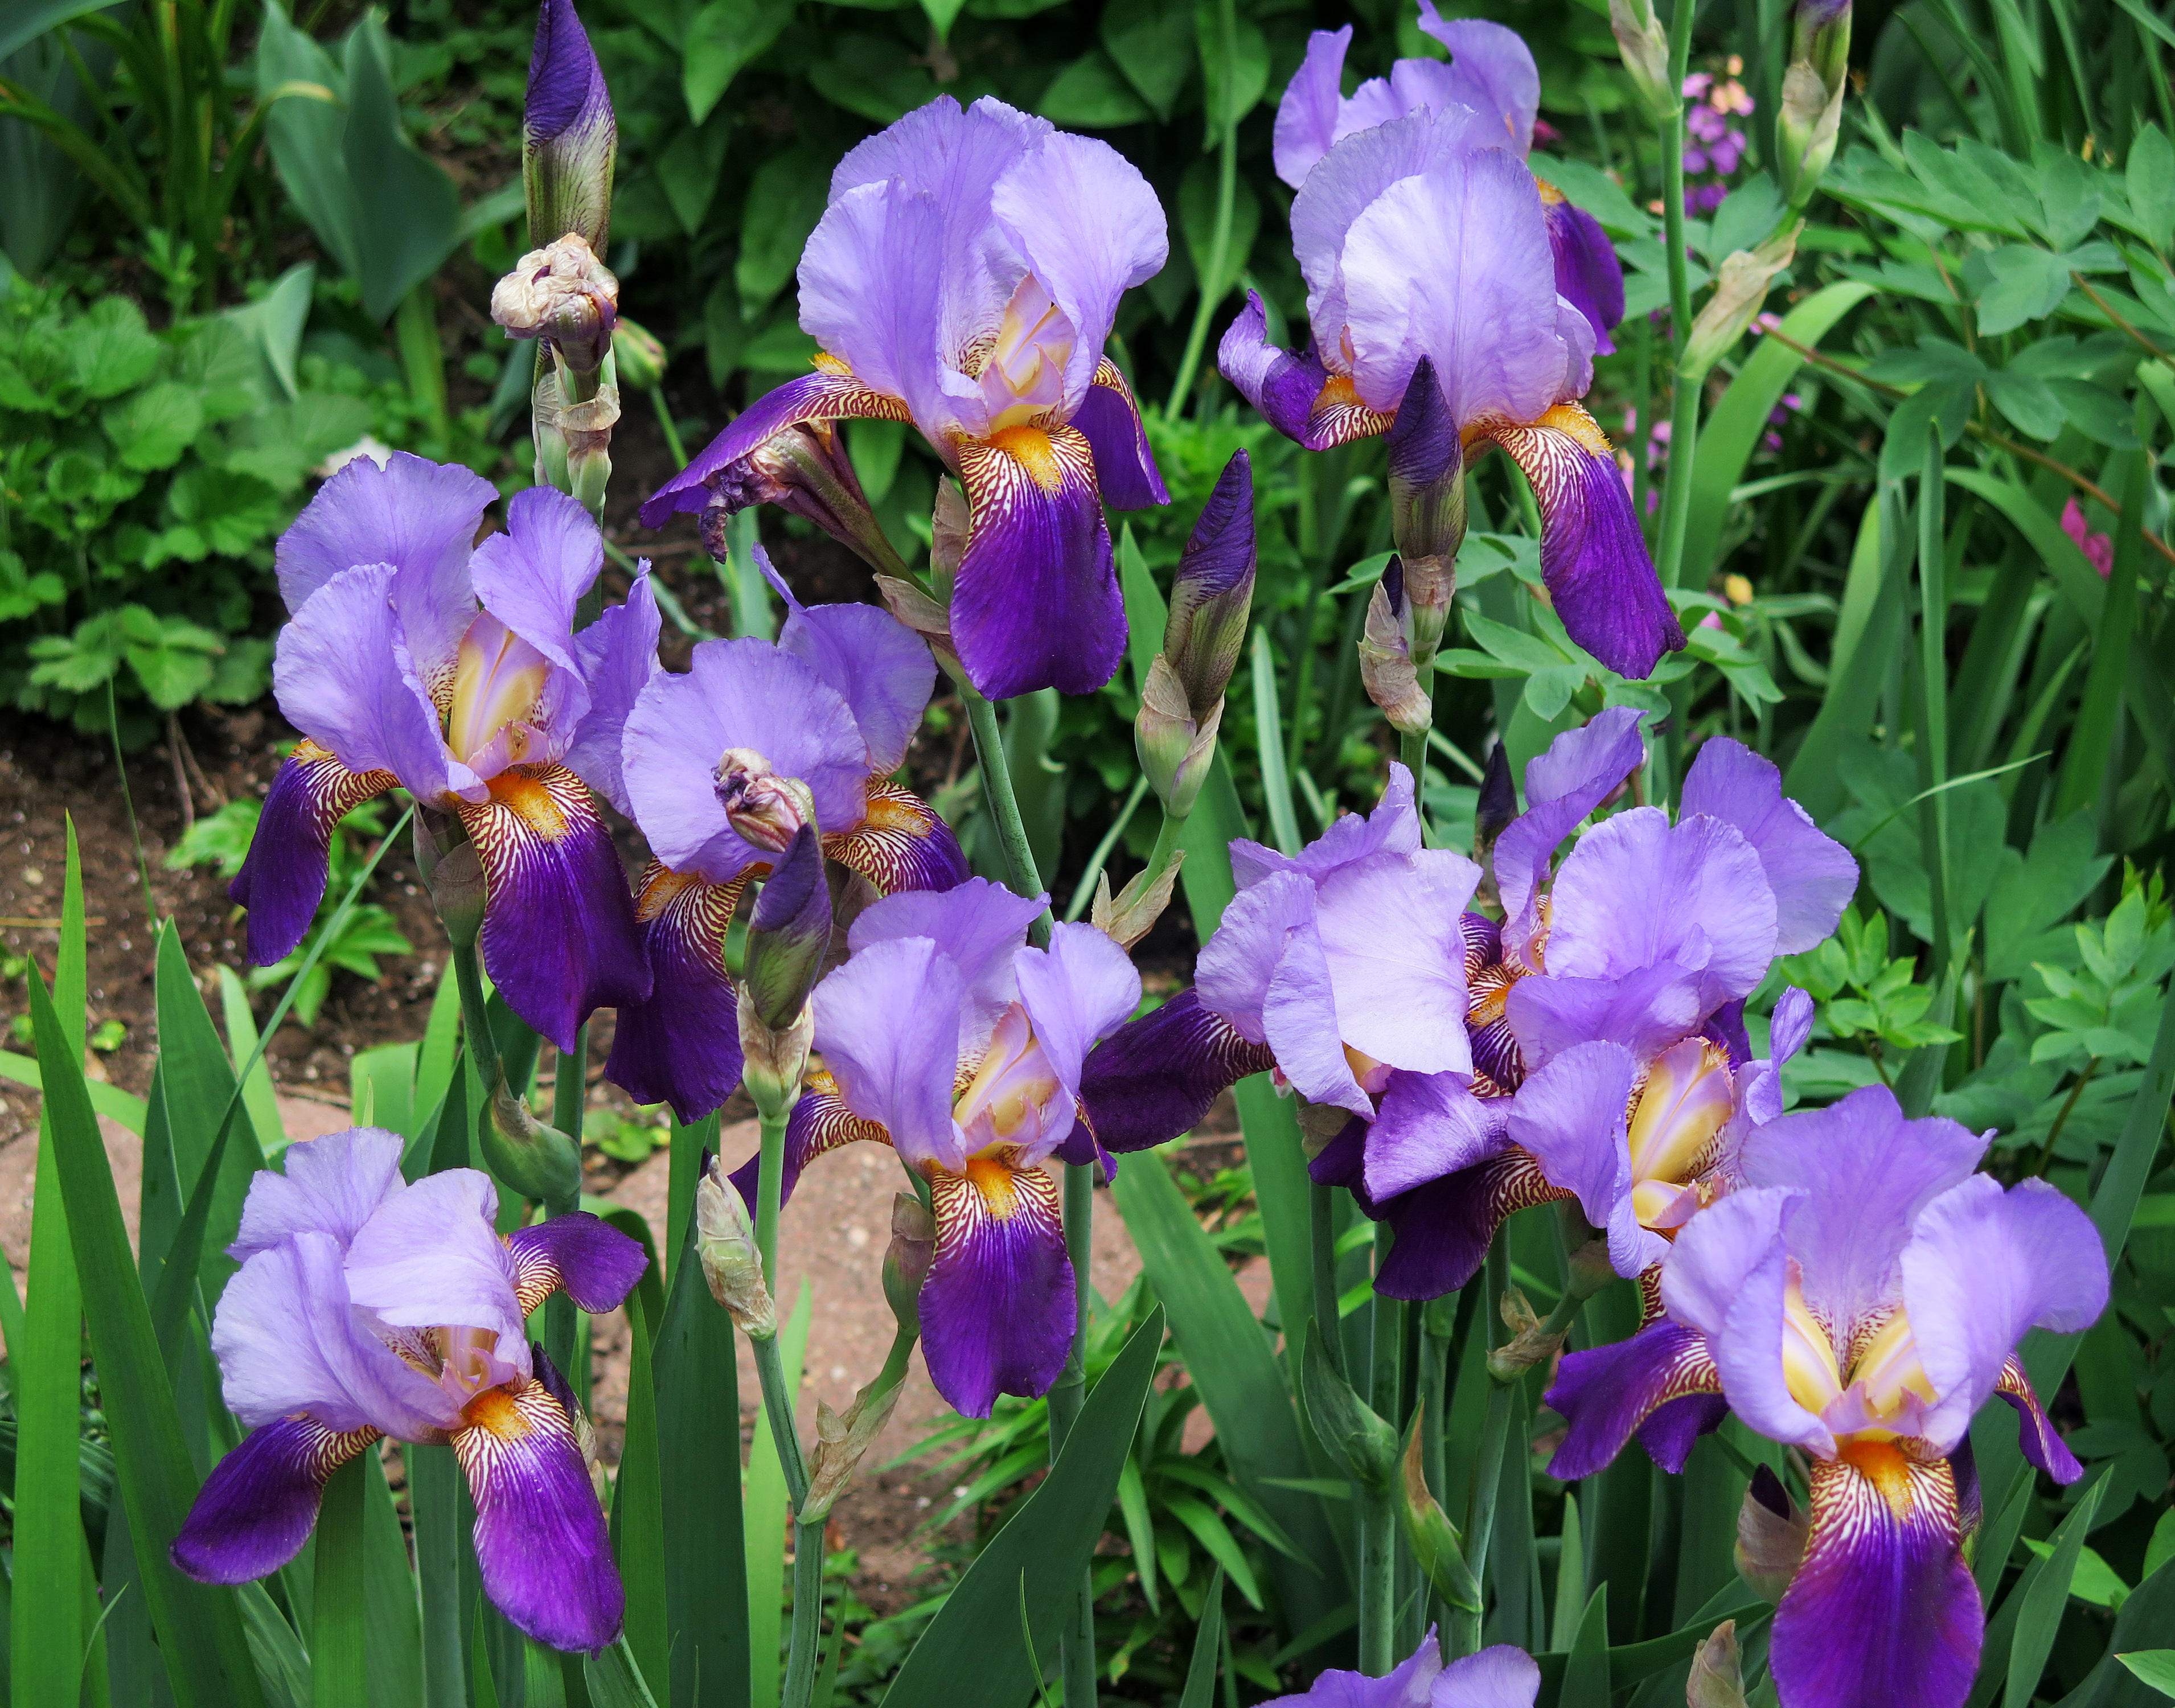 Iris Are Blooming